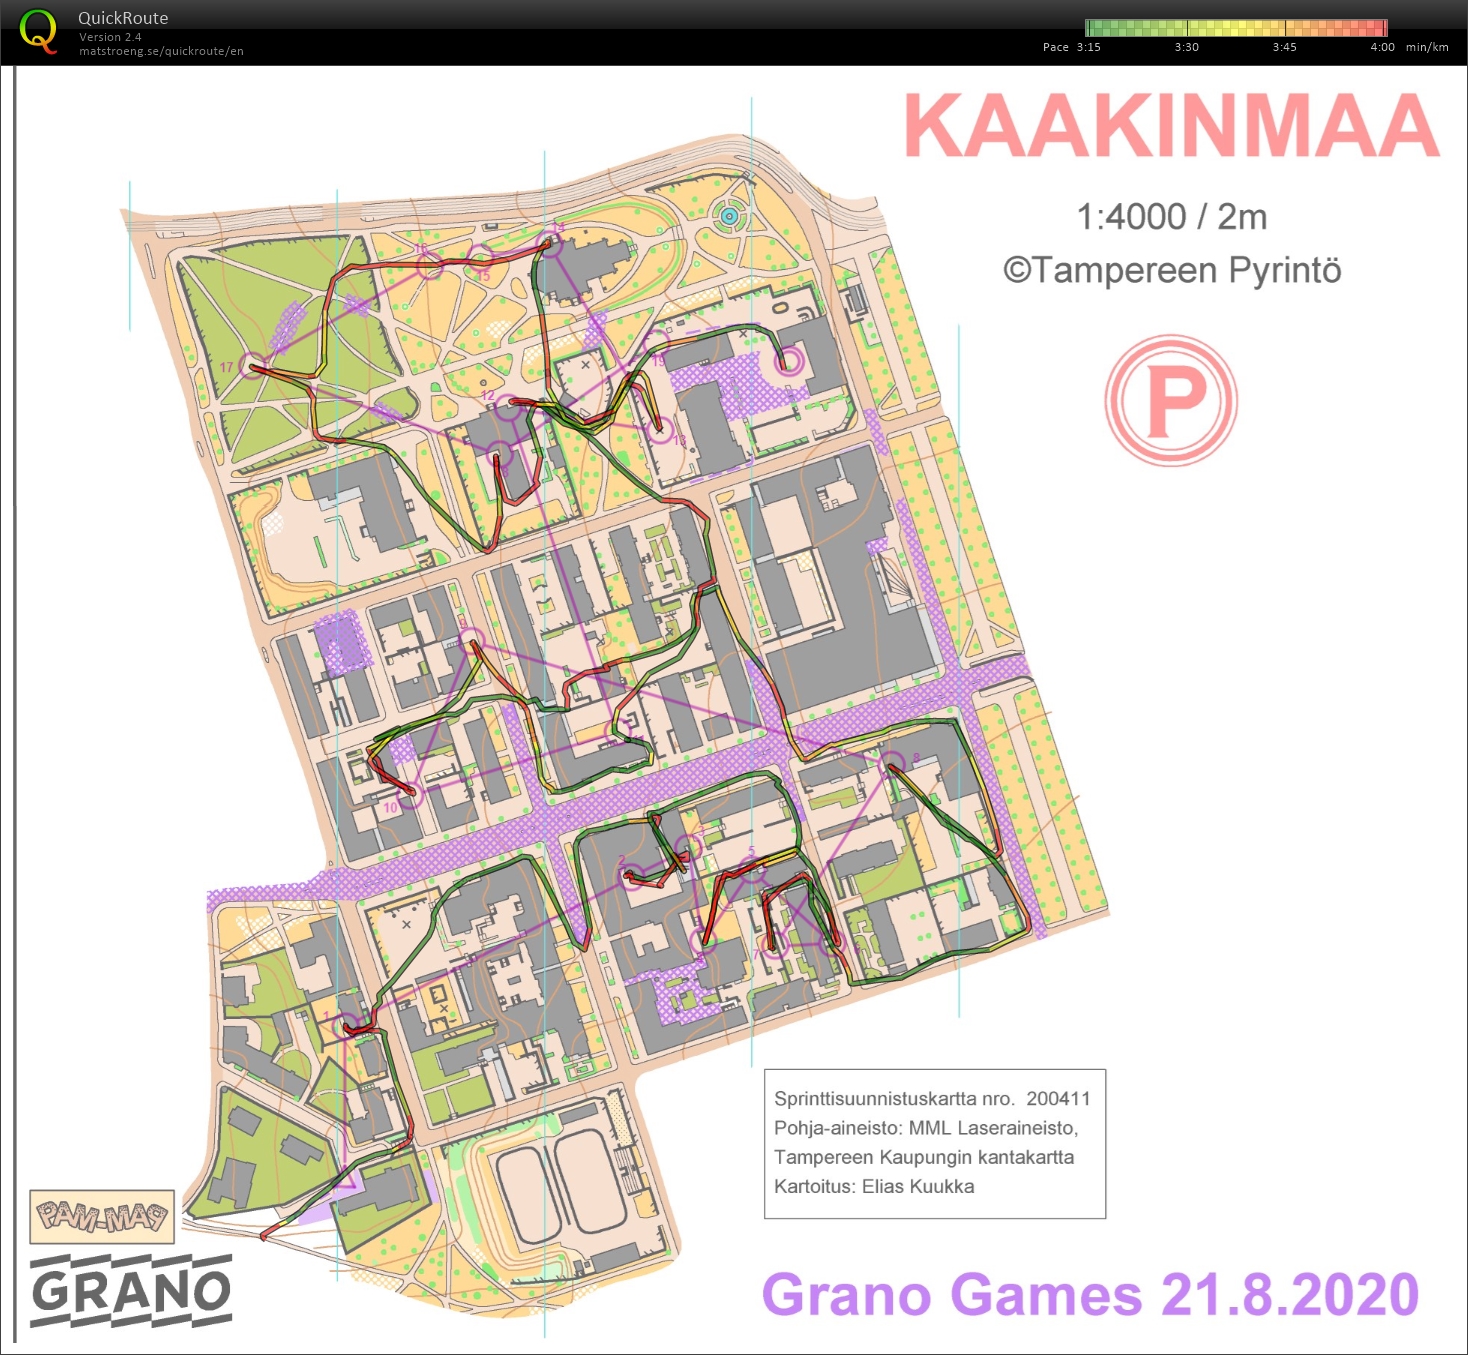 Grano Games, NEM-katsastus sprintti (21.08.2020)